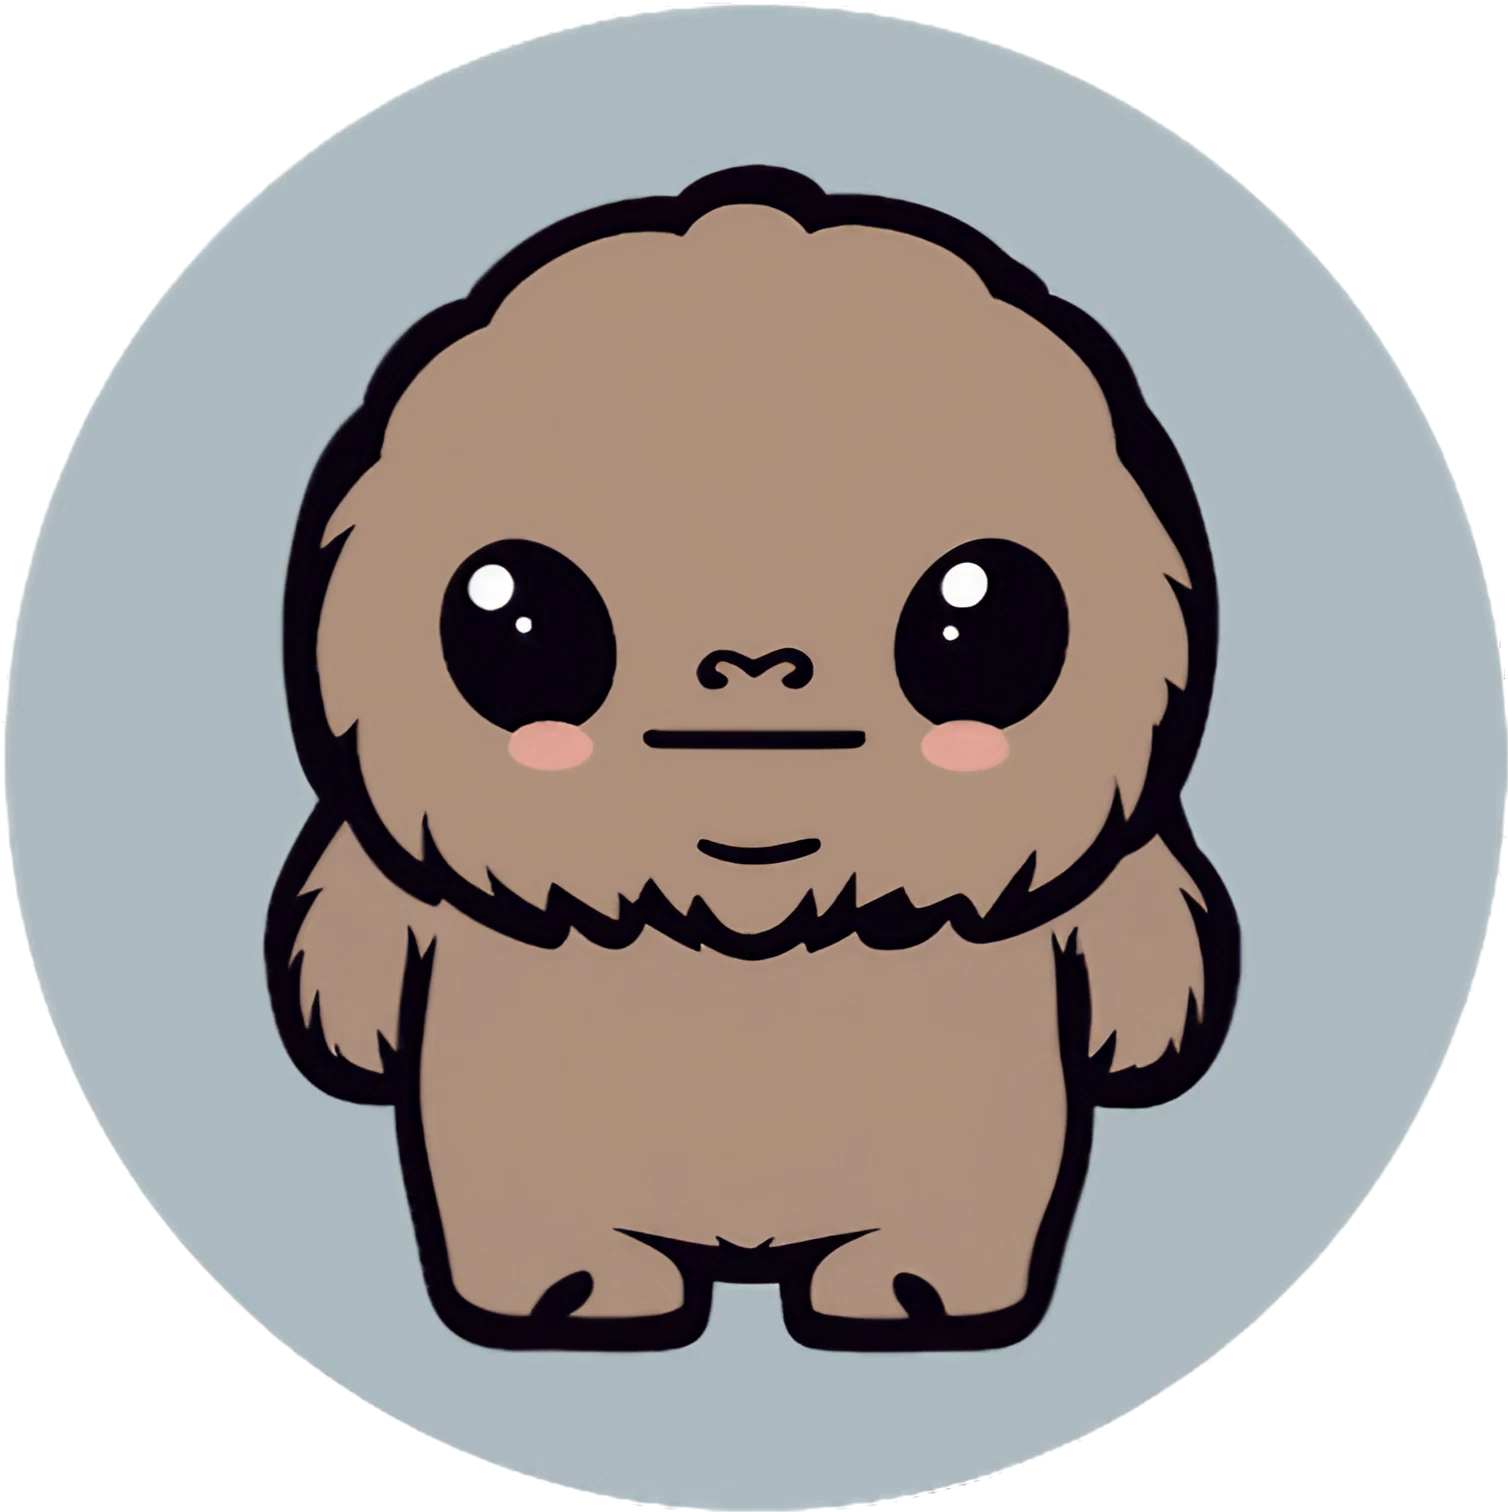 Chibi Kawaii Bigfoot - Soo Cute - Sticker - 3x3cm groß